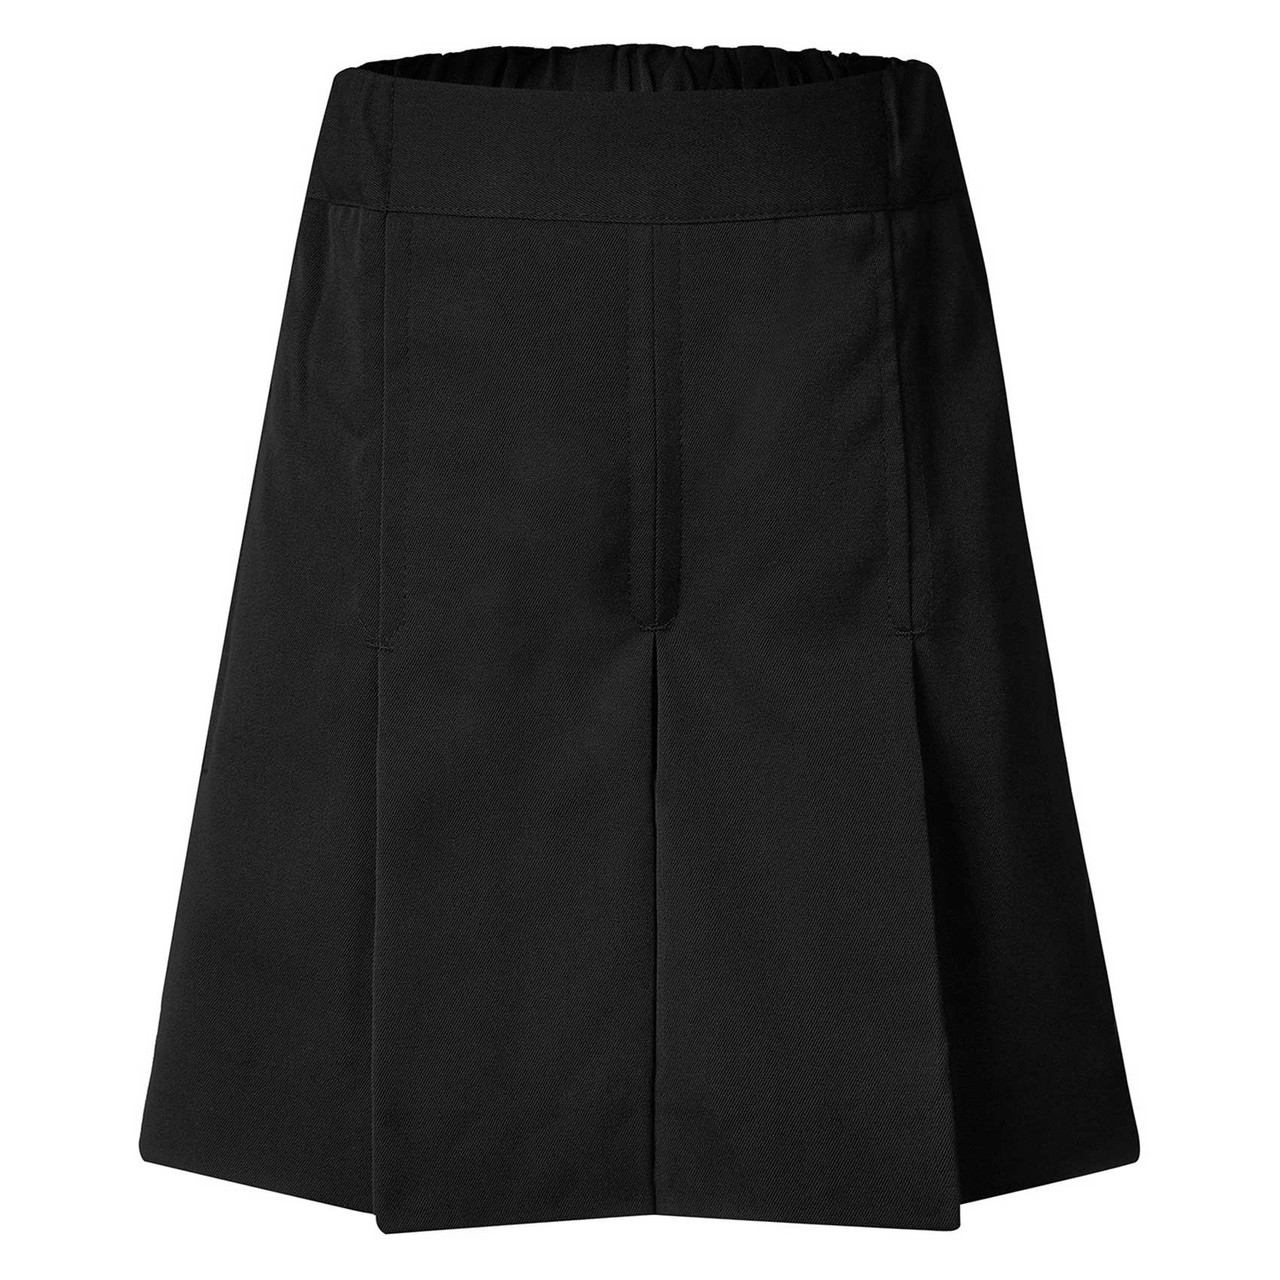 Shop Box-Pleat Girls School Shorts | Buy Online School Uniform Wholesale